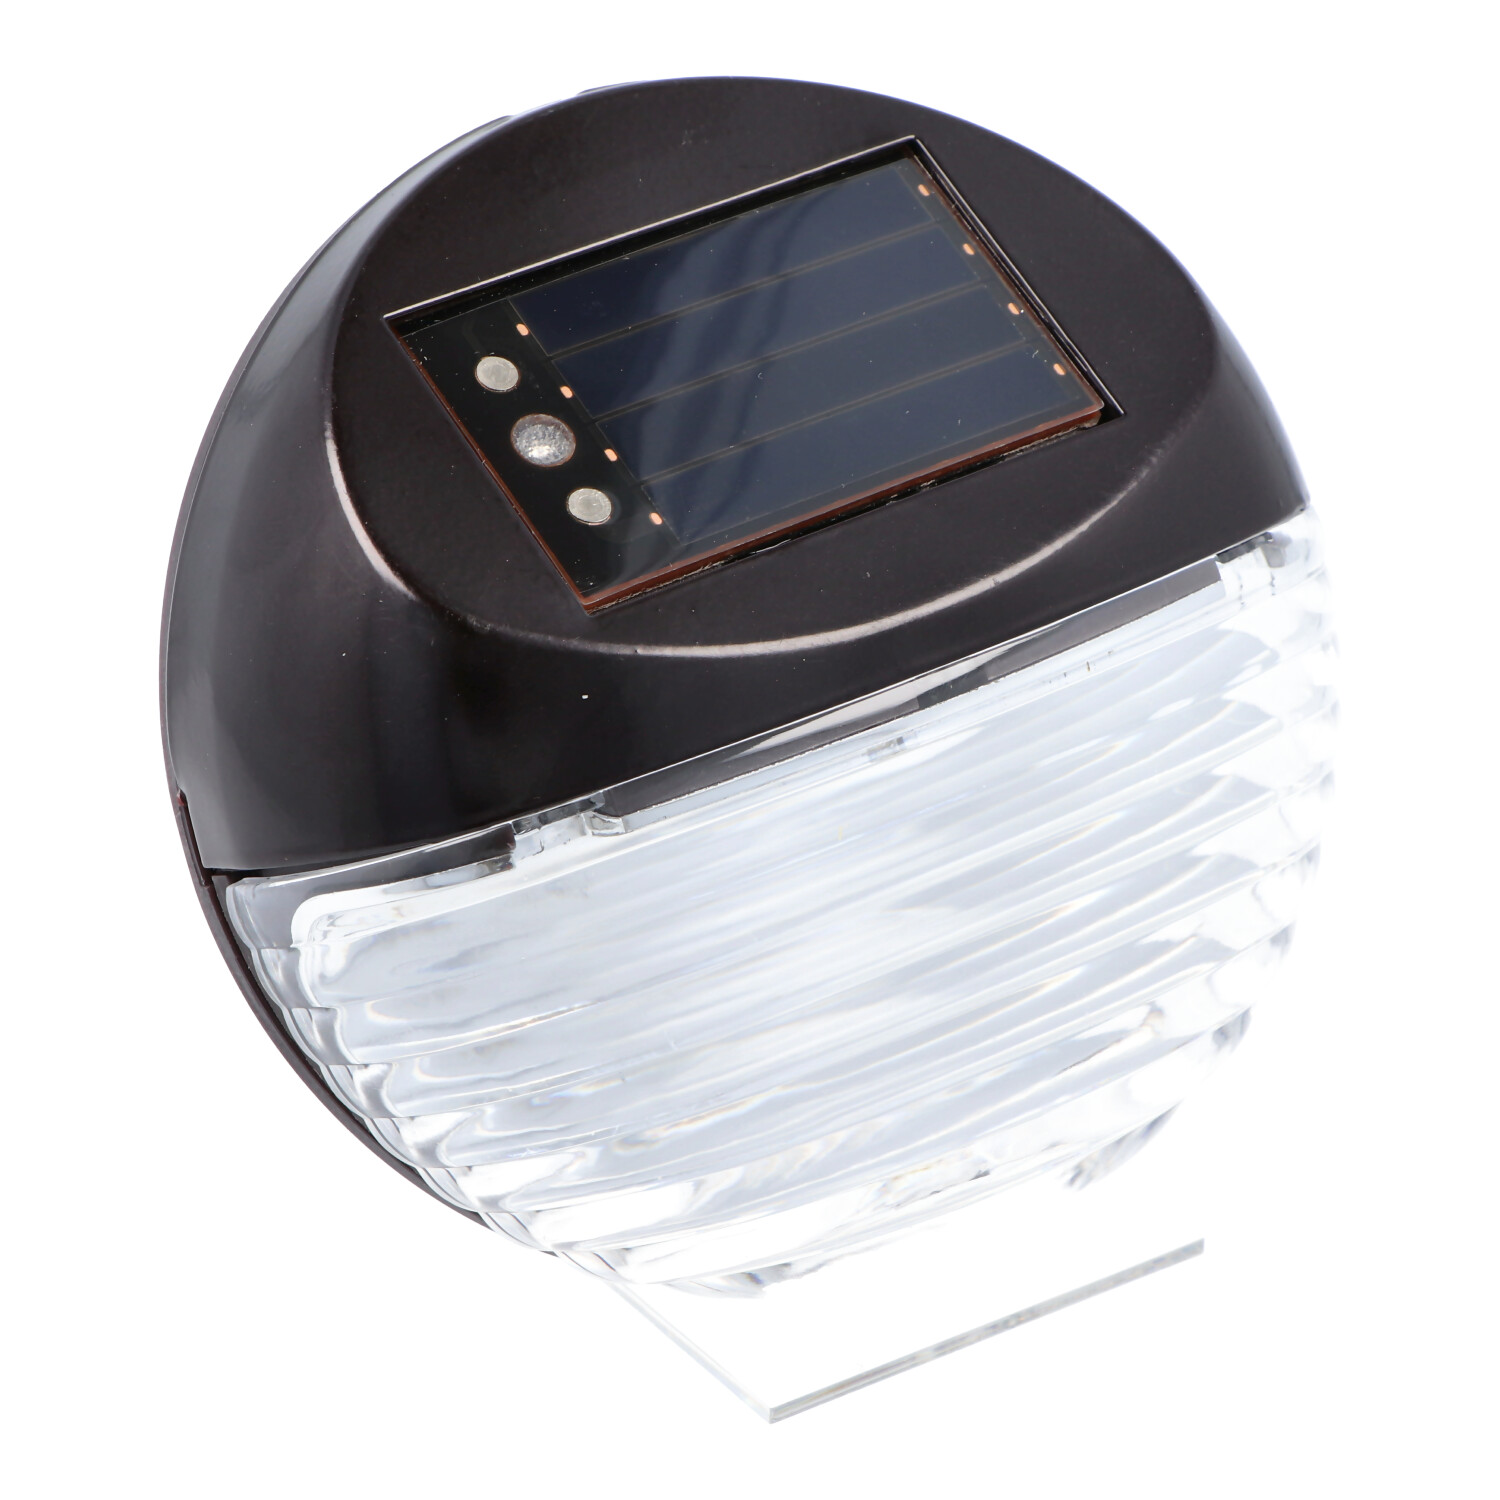 Duracell Solar LED Treppenlicht GLl038GDU als LED Treppen Licht, Set bestehend aus 4 Stück inklusive austauschbaren Akkus, metallic bronze